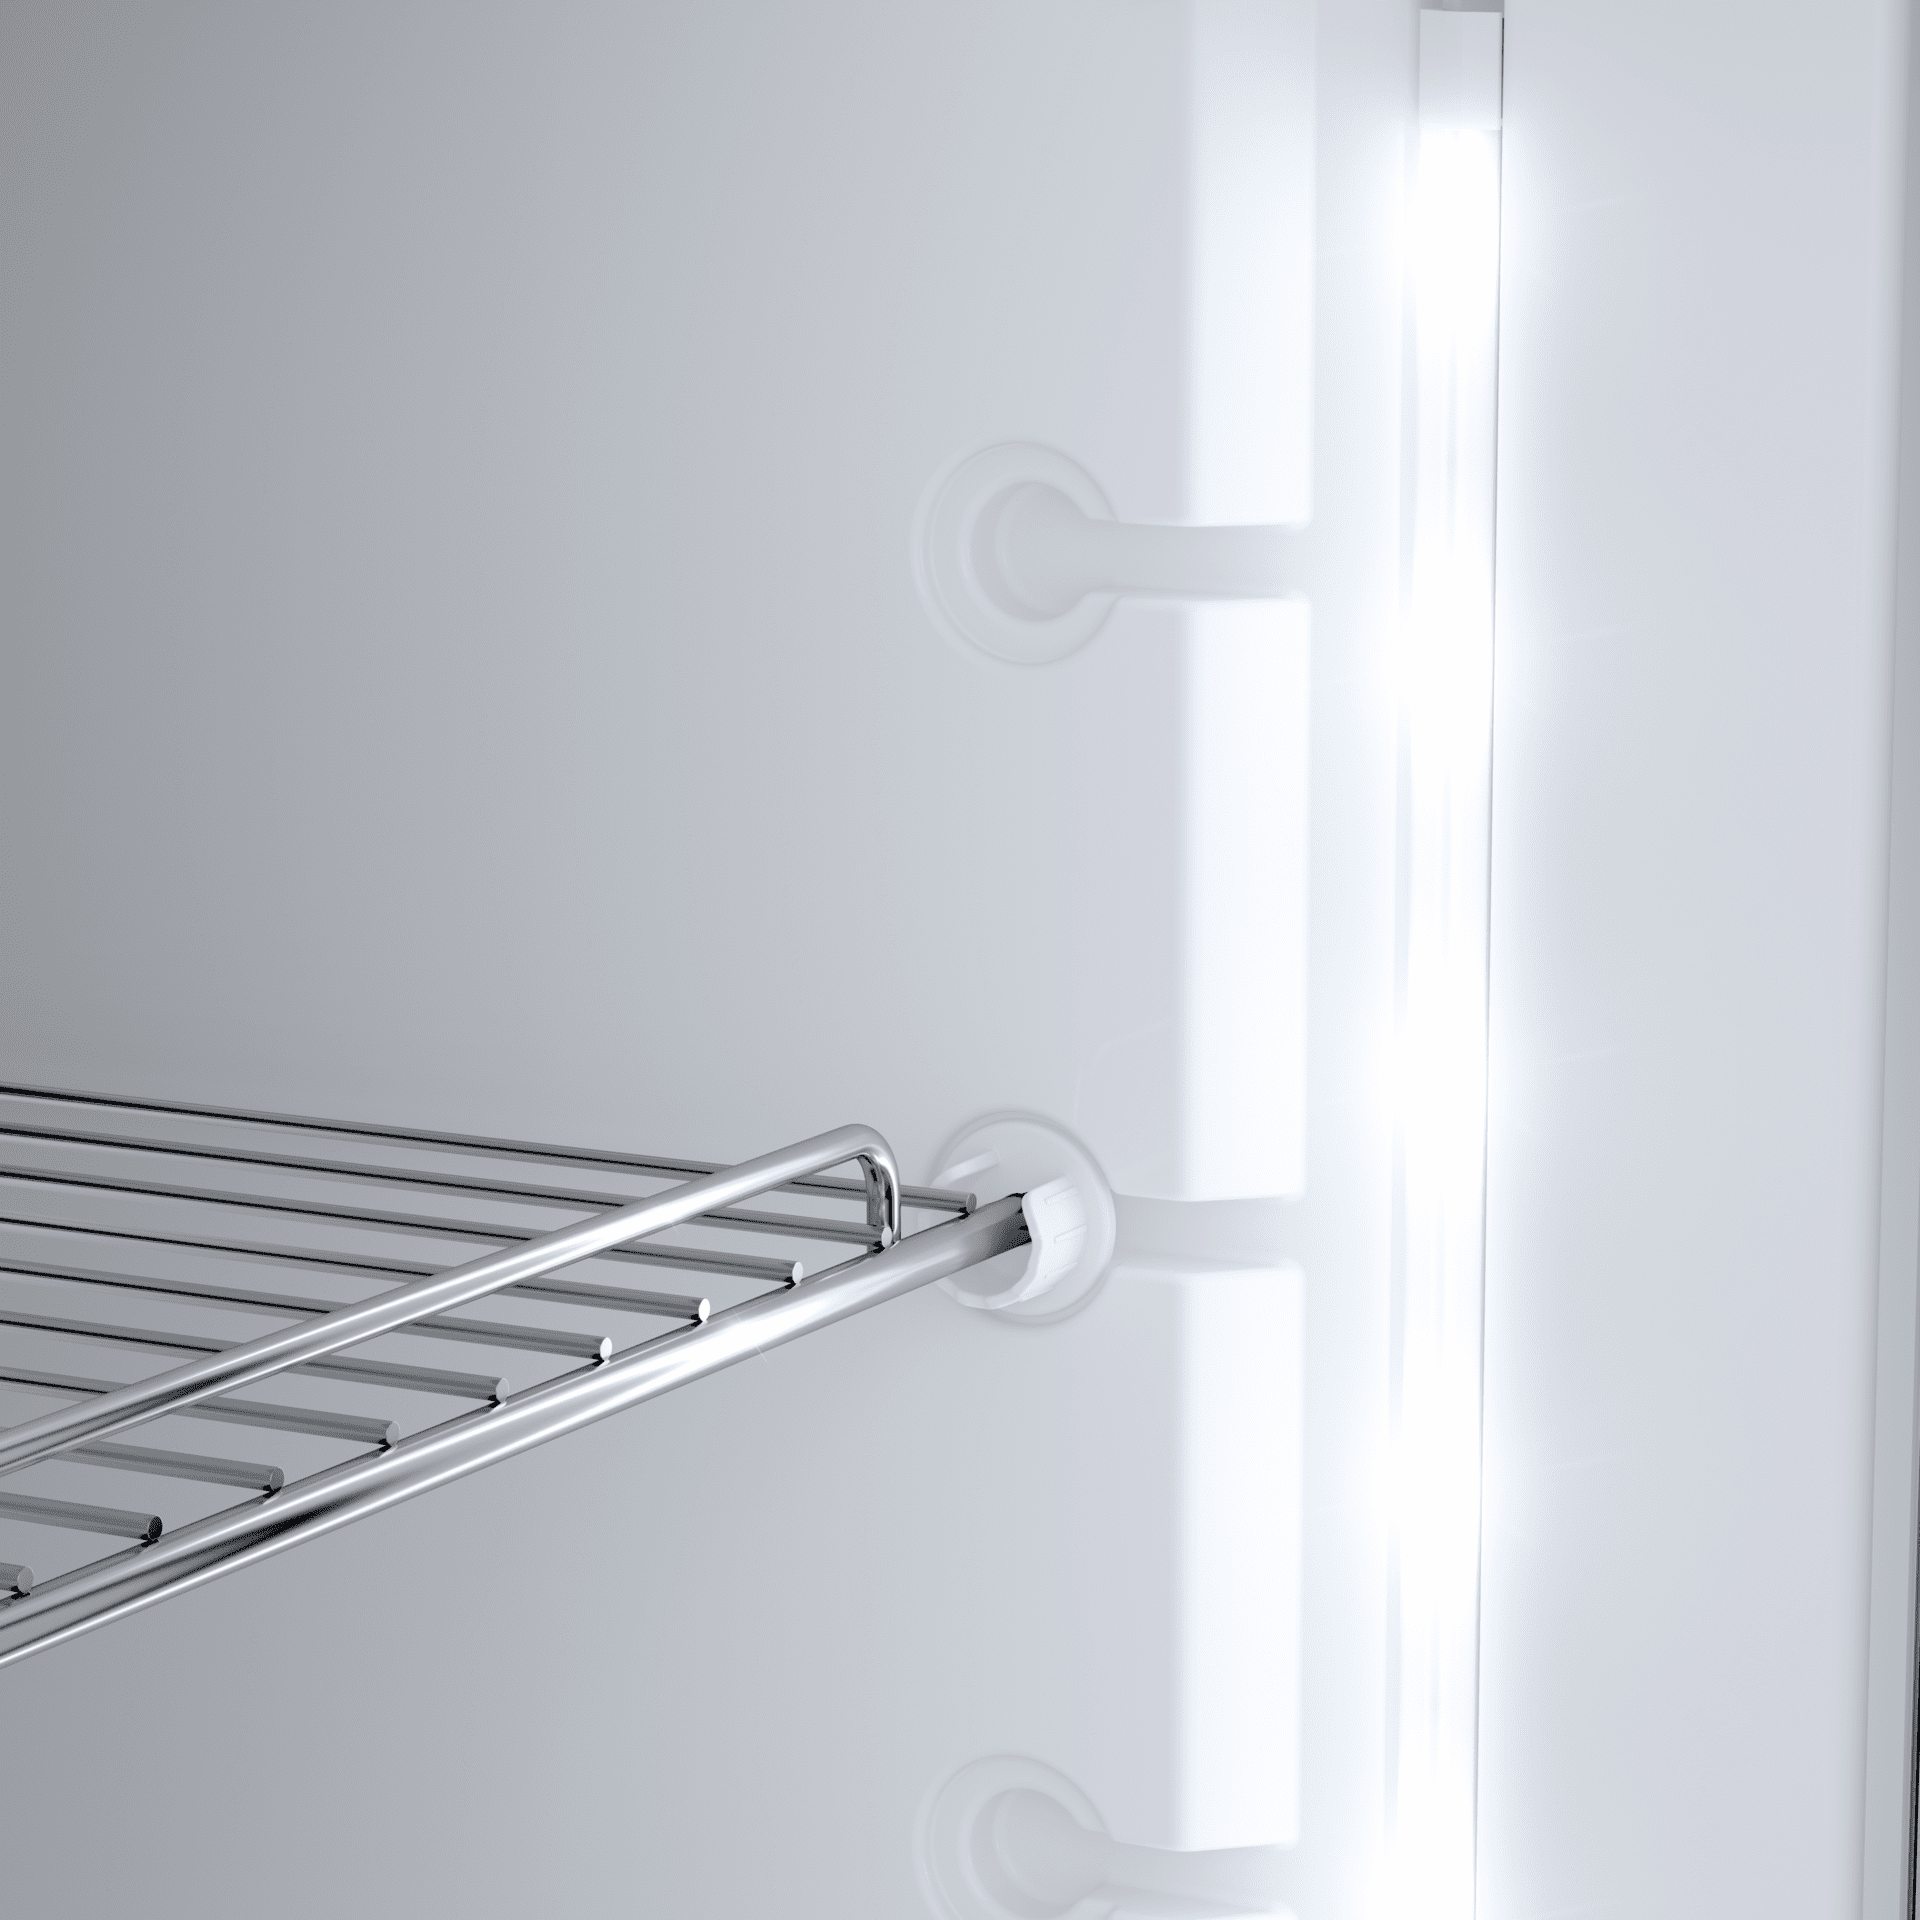 Dometic RC 10.4 70 - Compressor refrigerator, 70 l, LED display